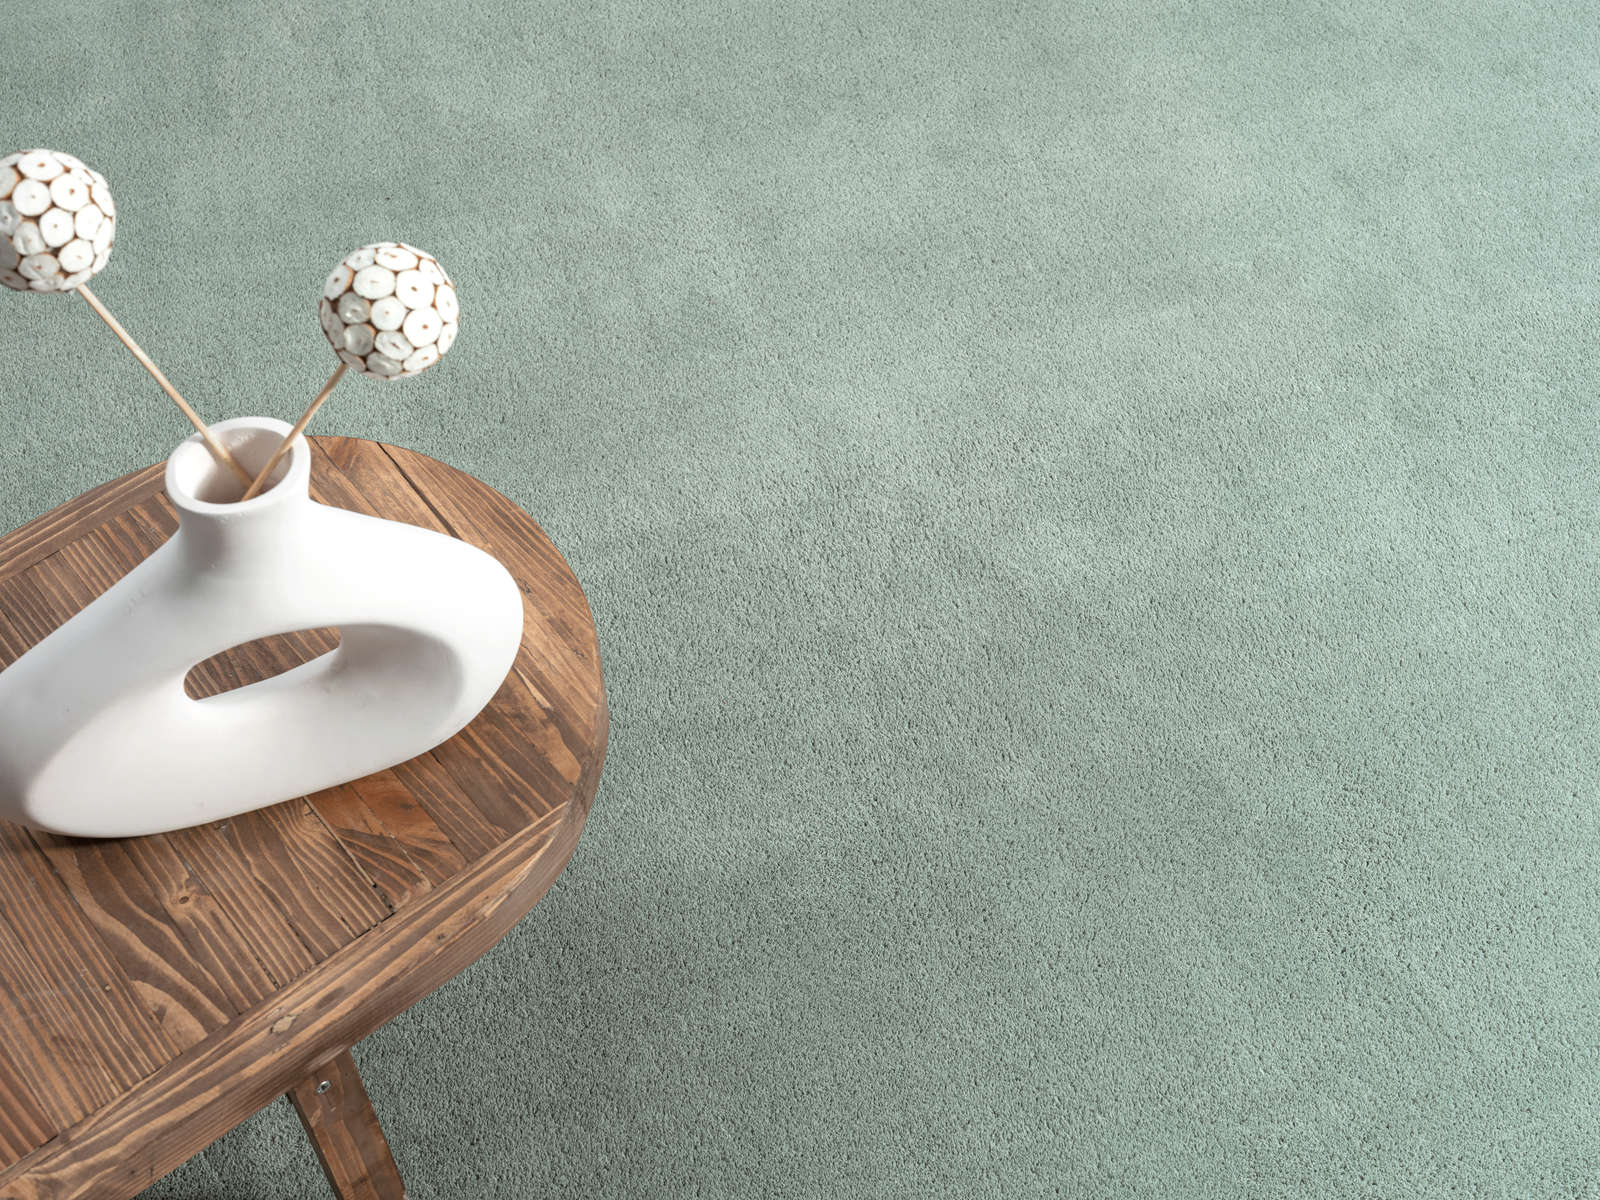             Soft pile carpet in green - 230 x 160 cm
        